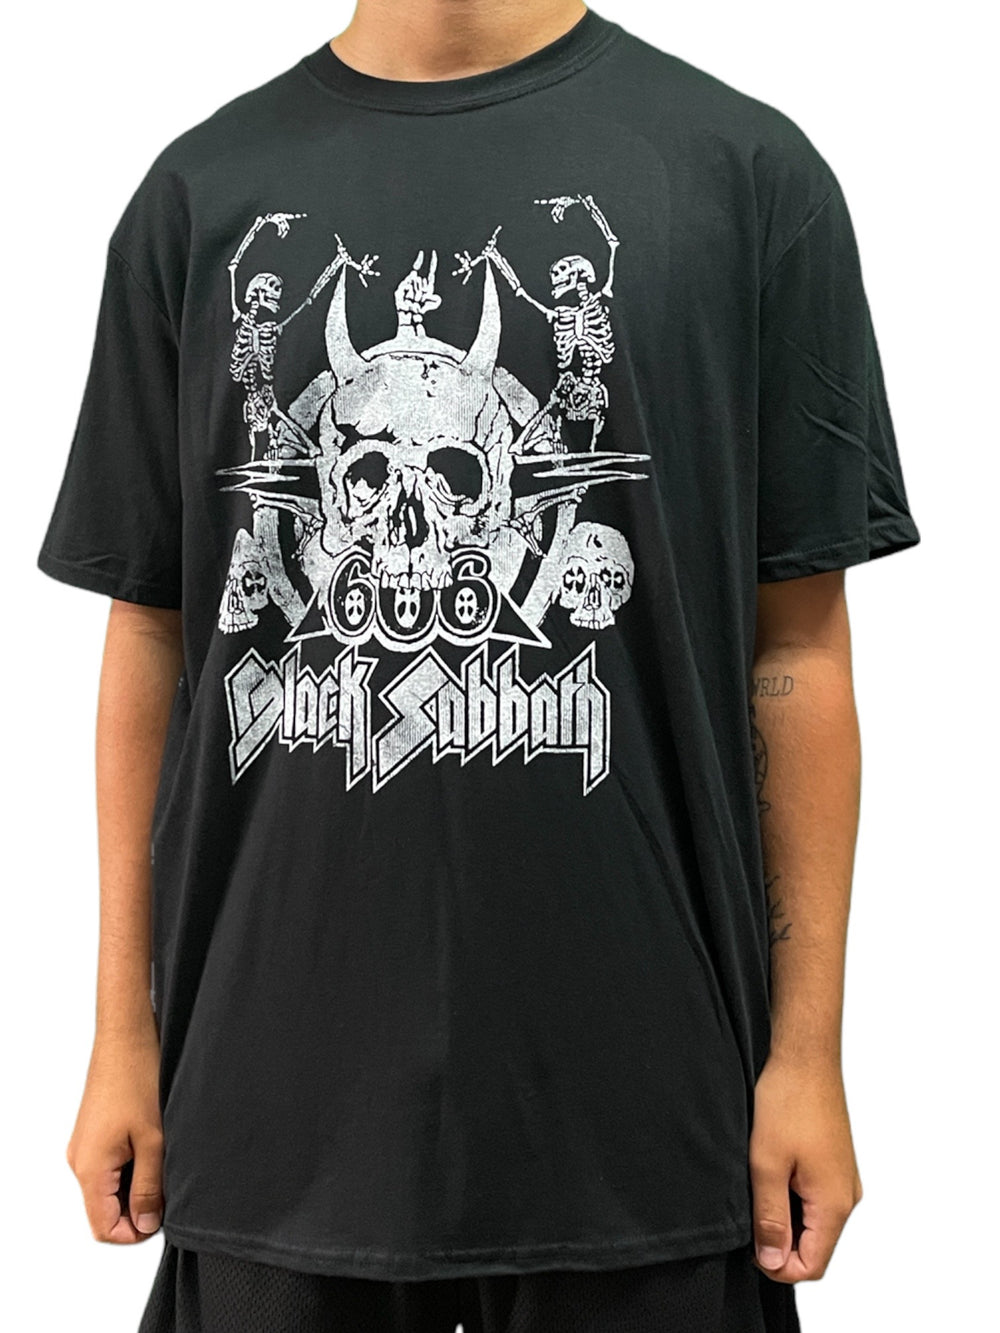 Black Sabbath Dancing Unisex Official T Shirt Brand New Various Sizes